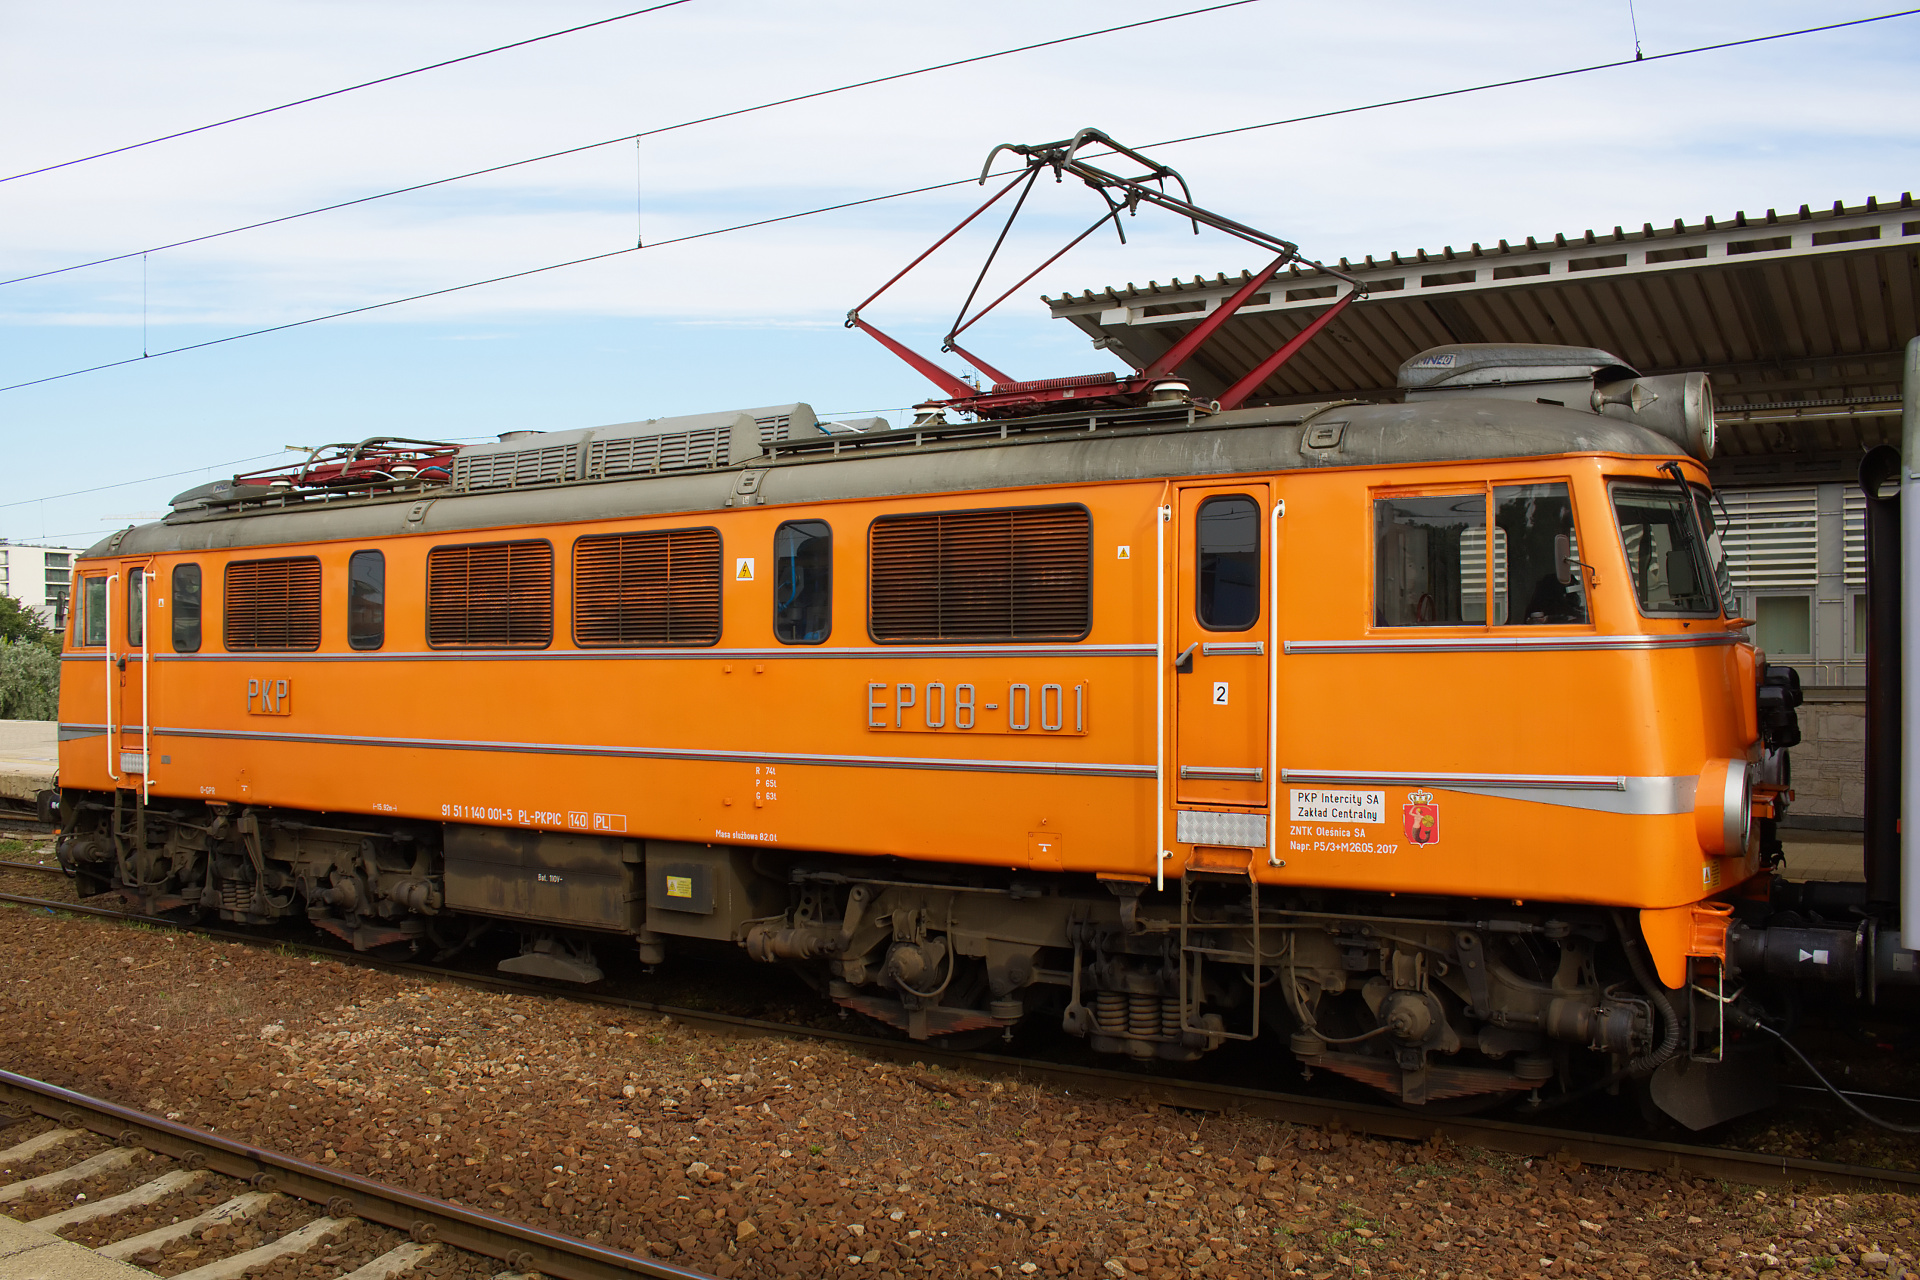 EP08-001 (retro livery) (Vehicles » Trains and Locomotives » Pafawag 102E)